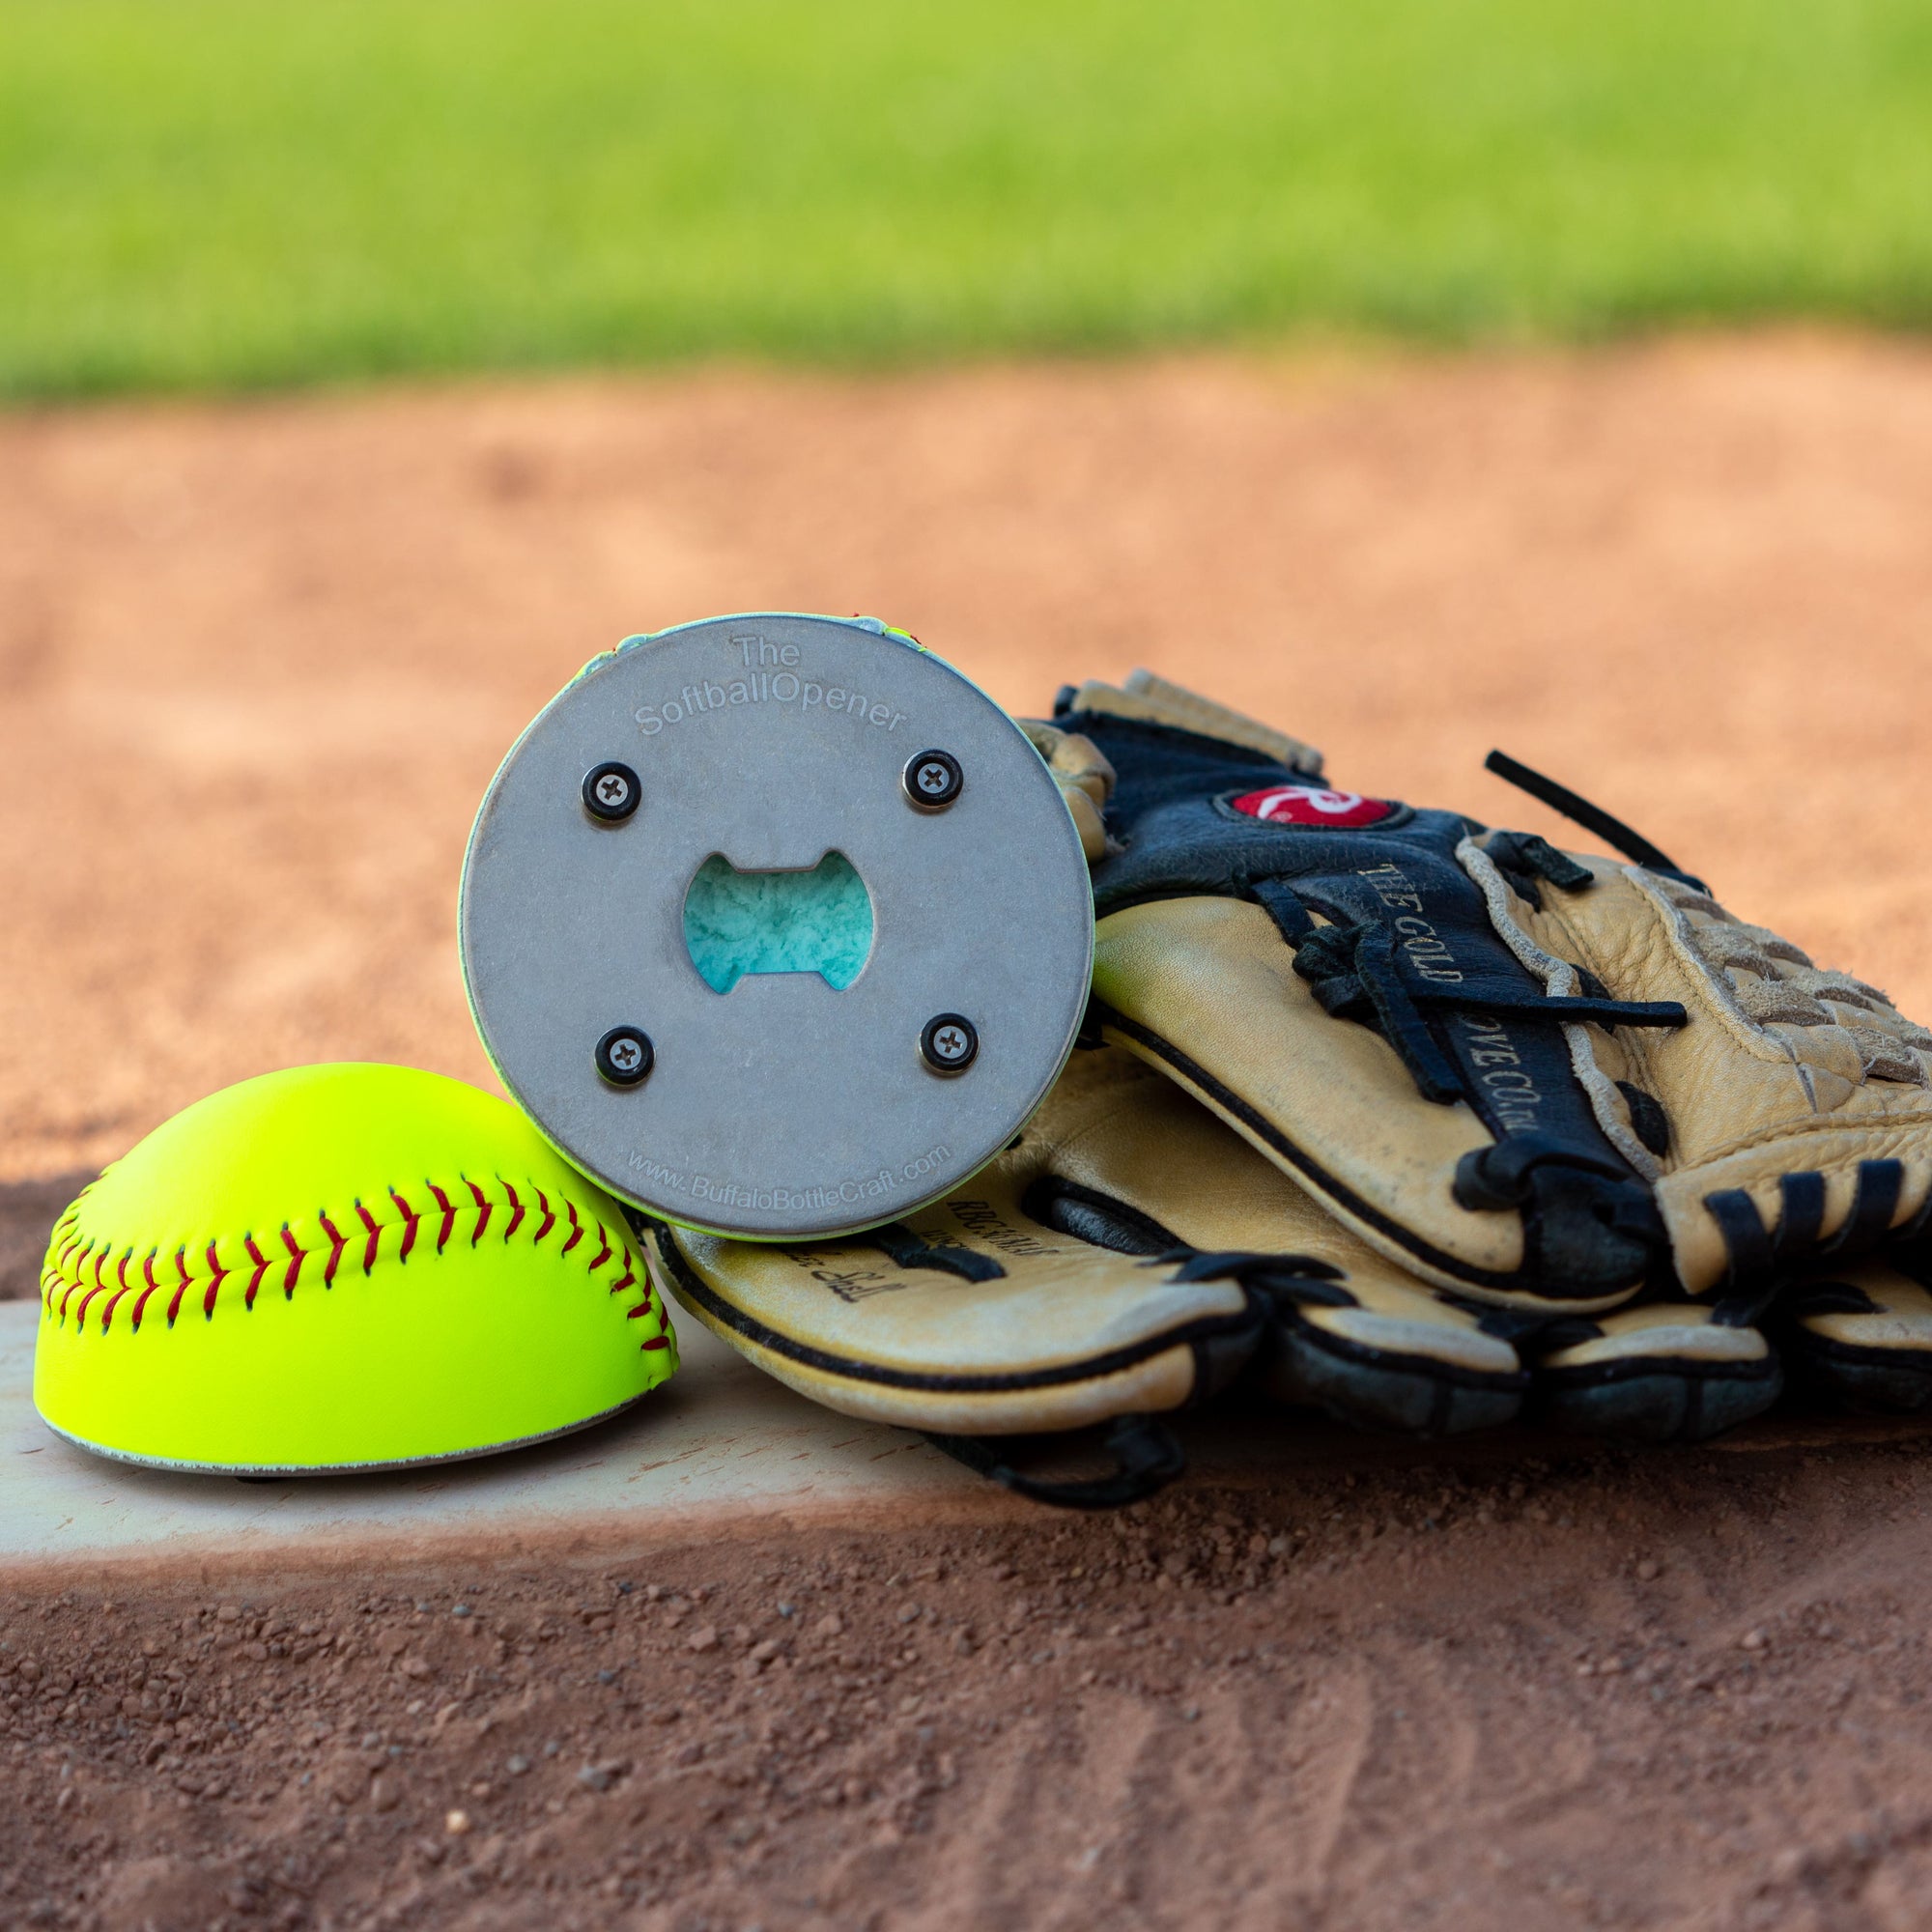 Softball Opener & Glove on Base